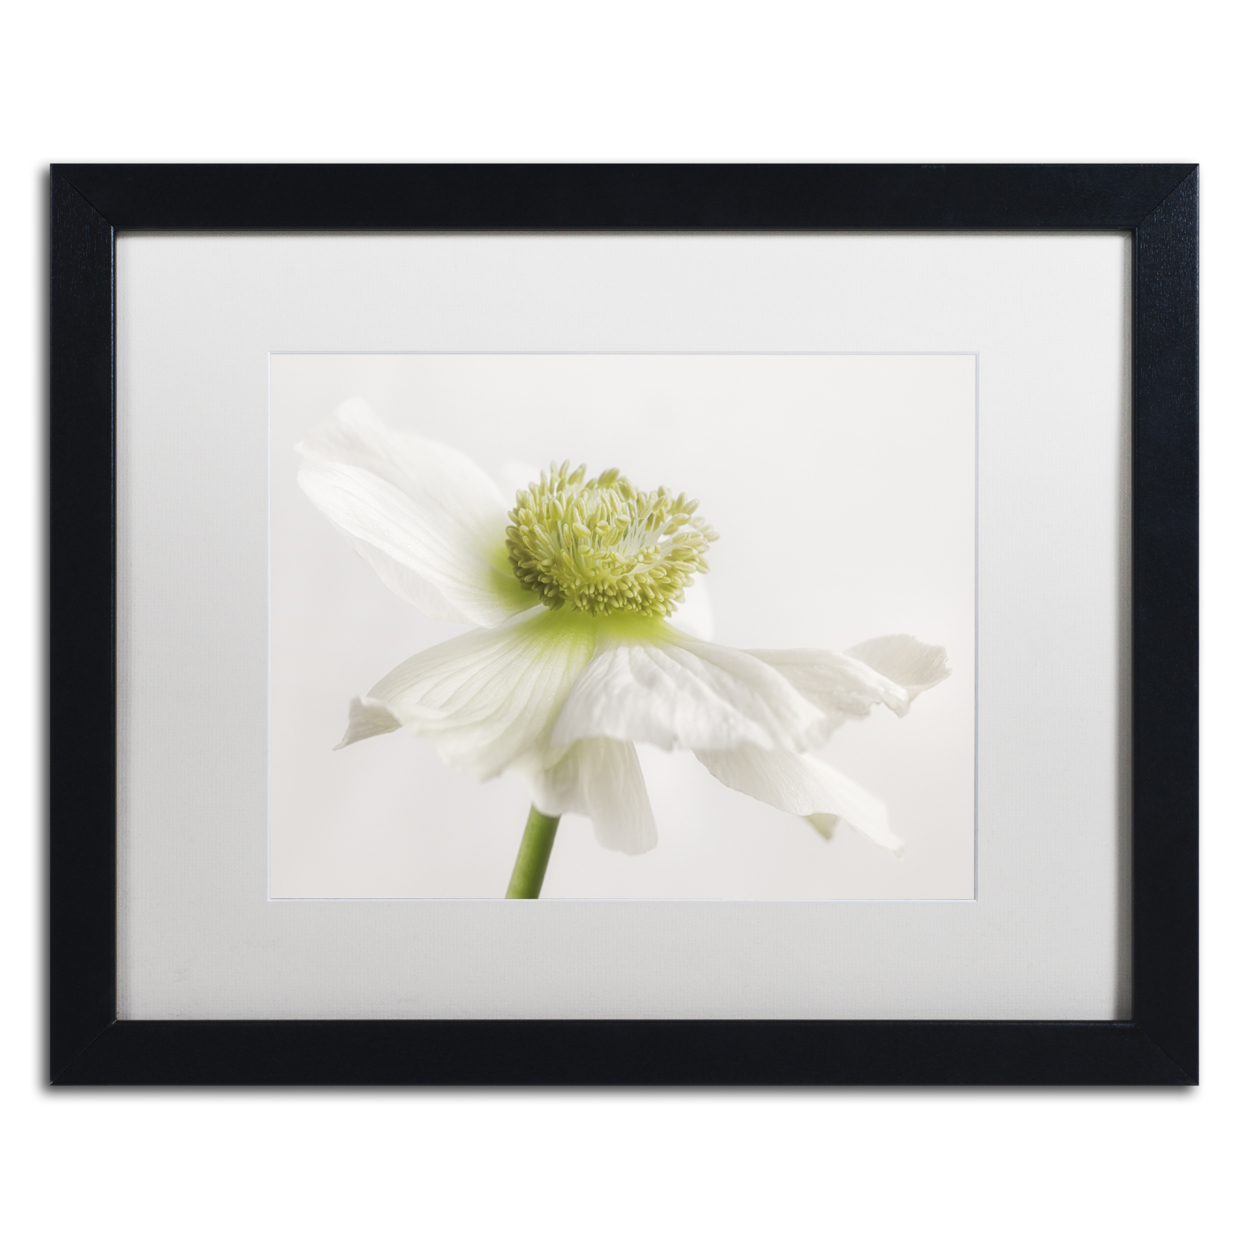 Cora Niele 'White Anemone Flower' Black Wooden Framed Art 18 X 22 Inches